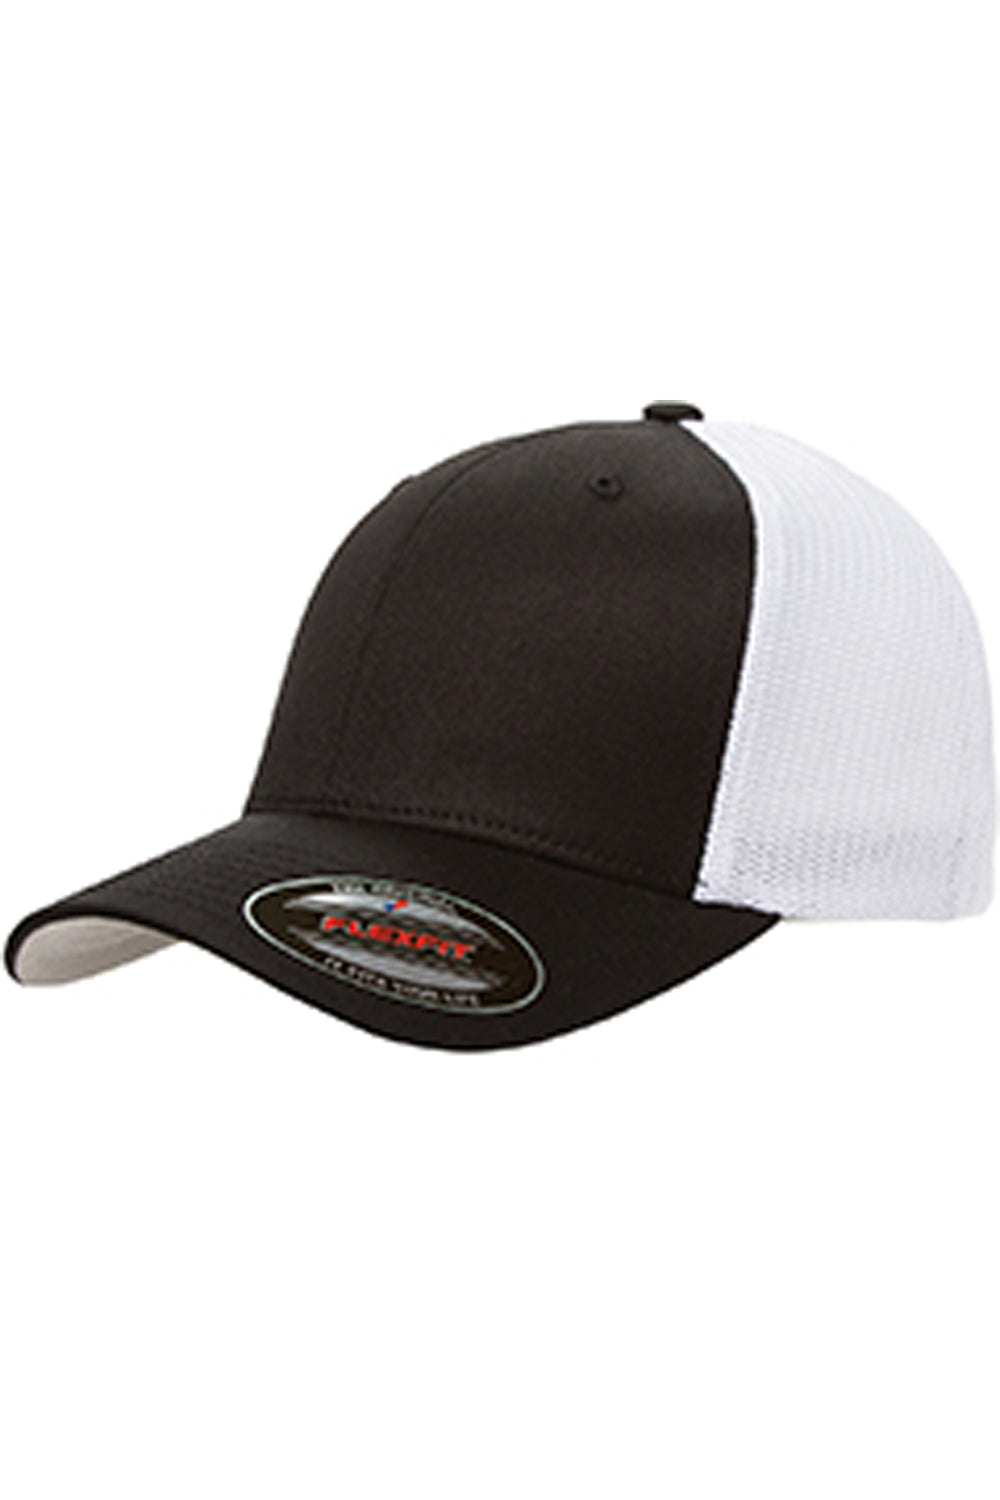 Flexfit 6511 Mens Stretch Fit Trucker Hat Black/White Front